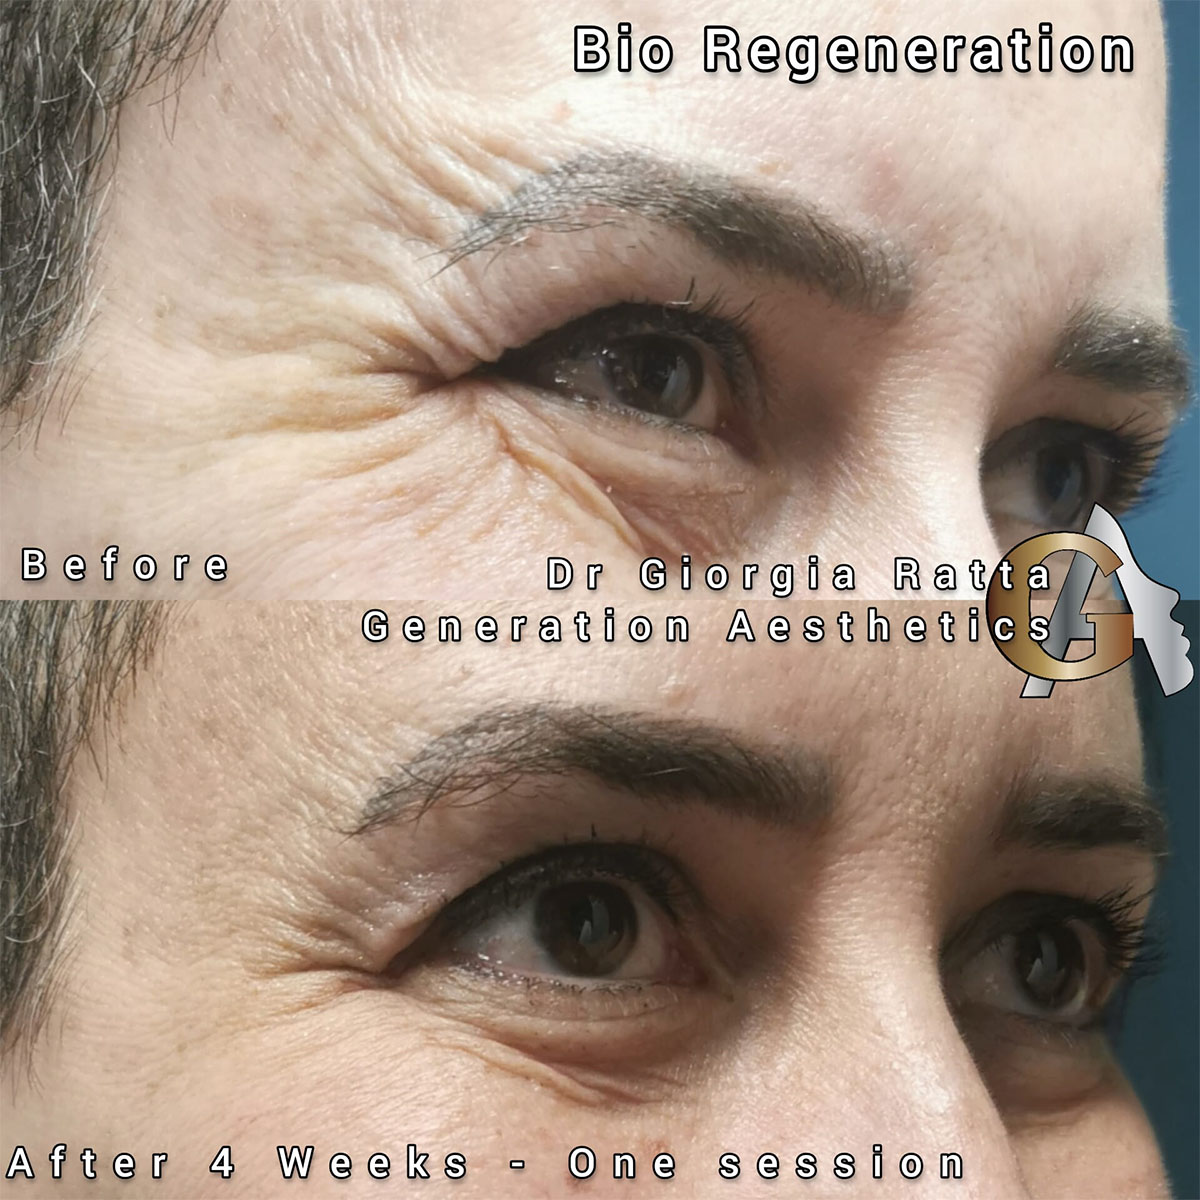 Dr Giorgia Ratta - Generation Aesthetics Clinics - regenerative aesthetic medicine using plenhyage and newsest